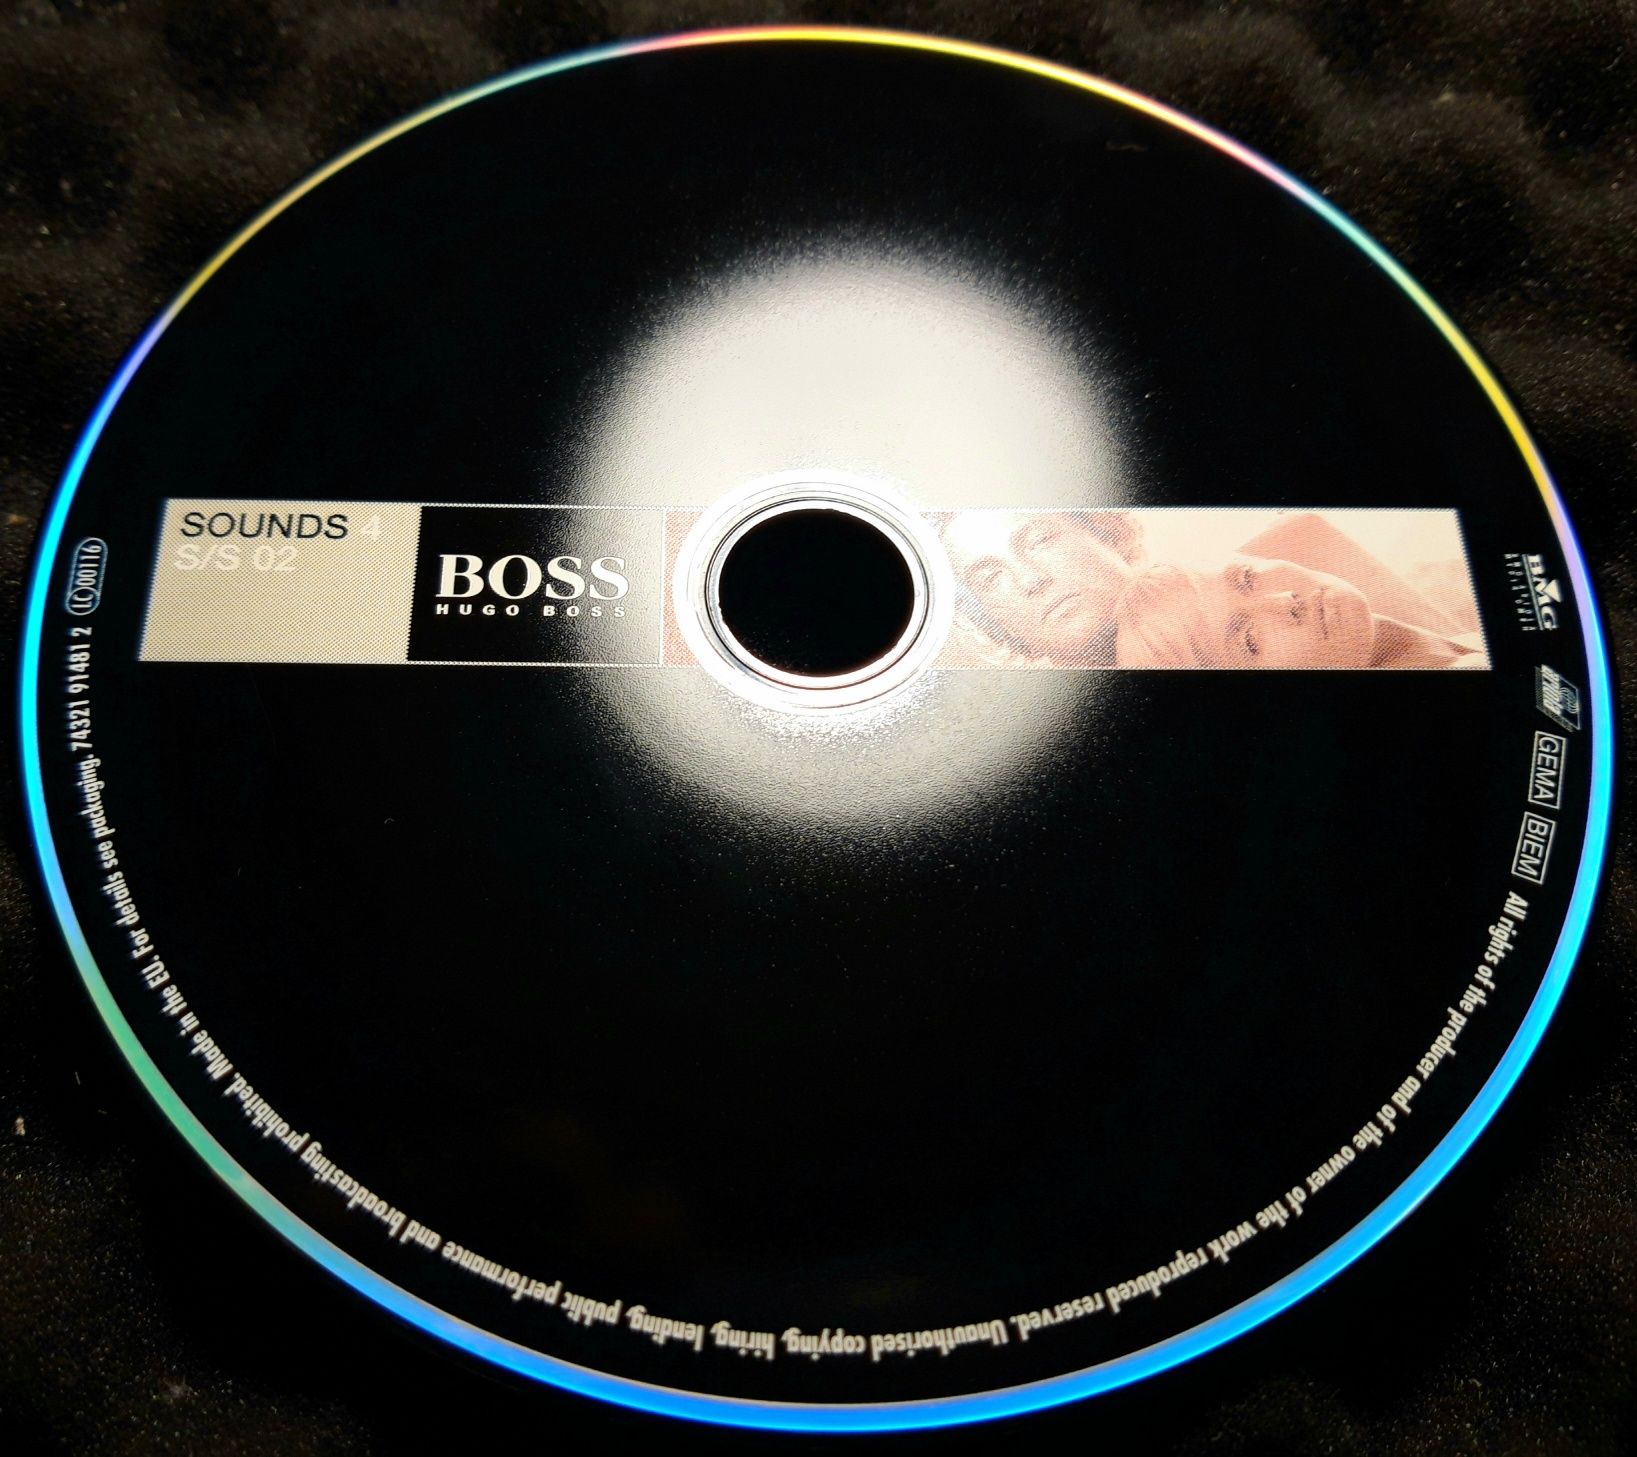 Sounds 4 S/S 02 Boss Hugo Boss (CD, 2001, UNIKAT)